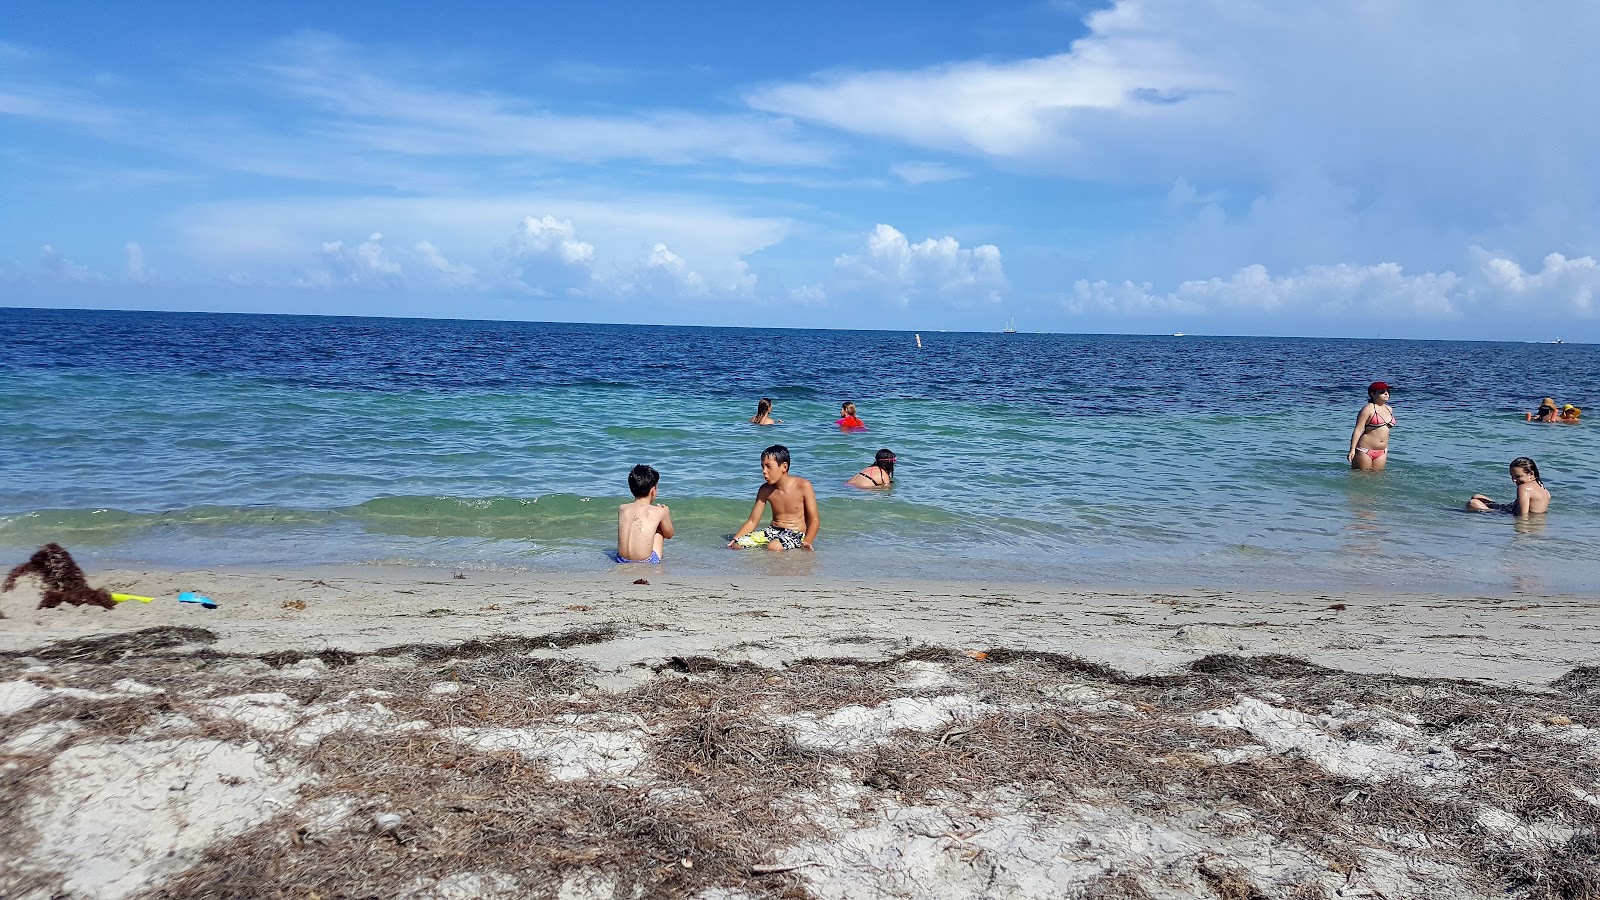 Fotografie cu Cape Florida beach cu nivelul de curățenie in medie